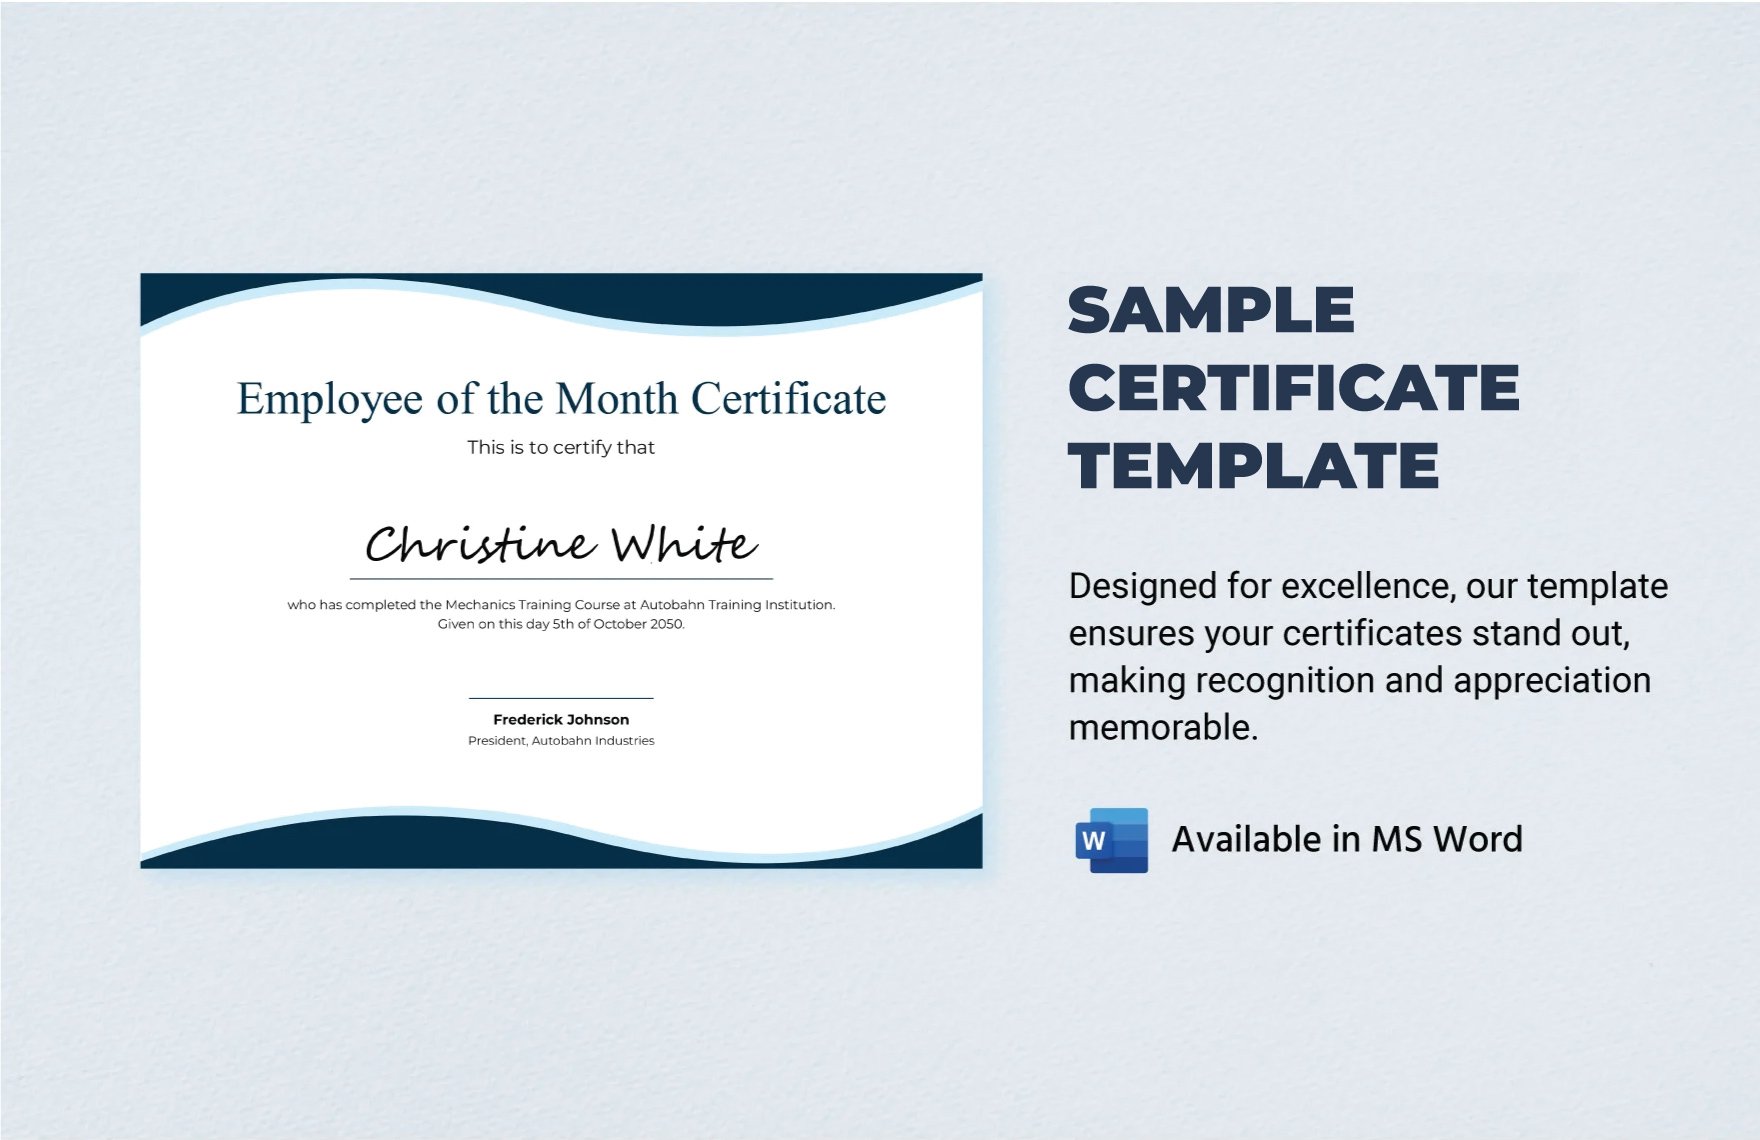 Sample Certificate Template 